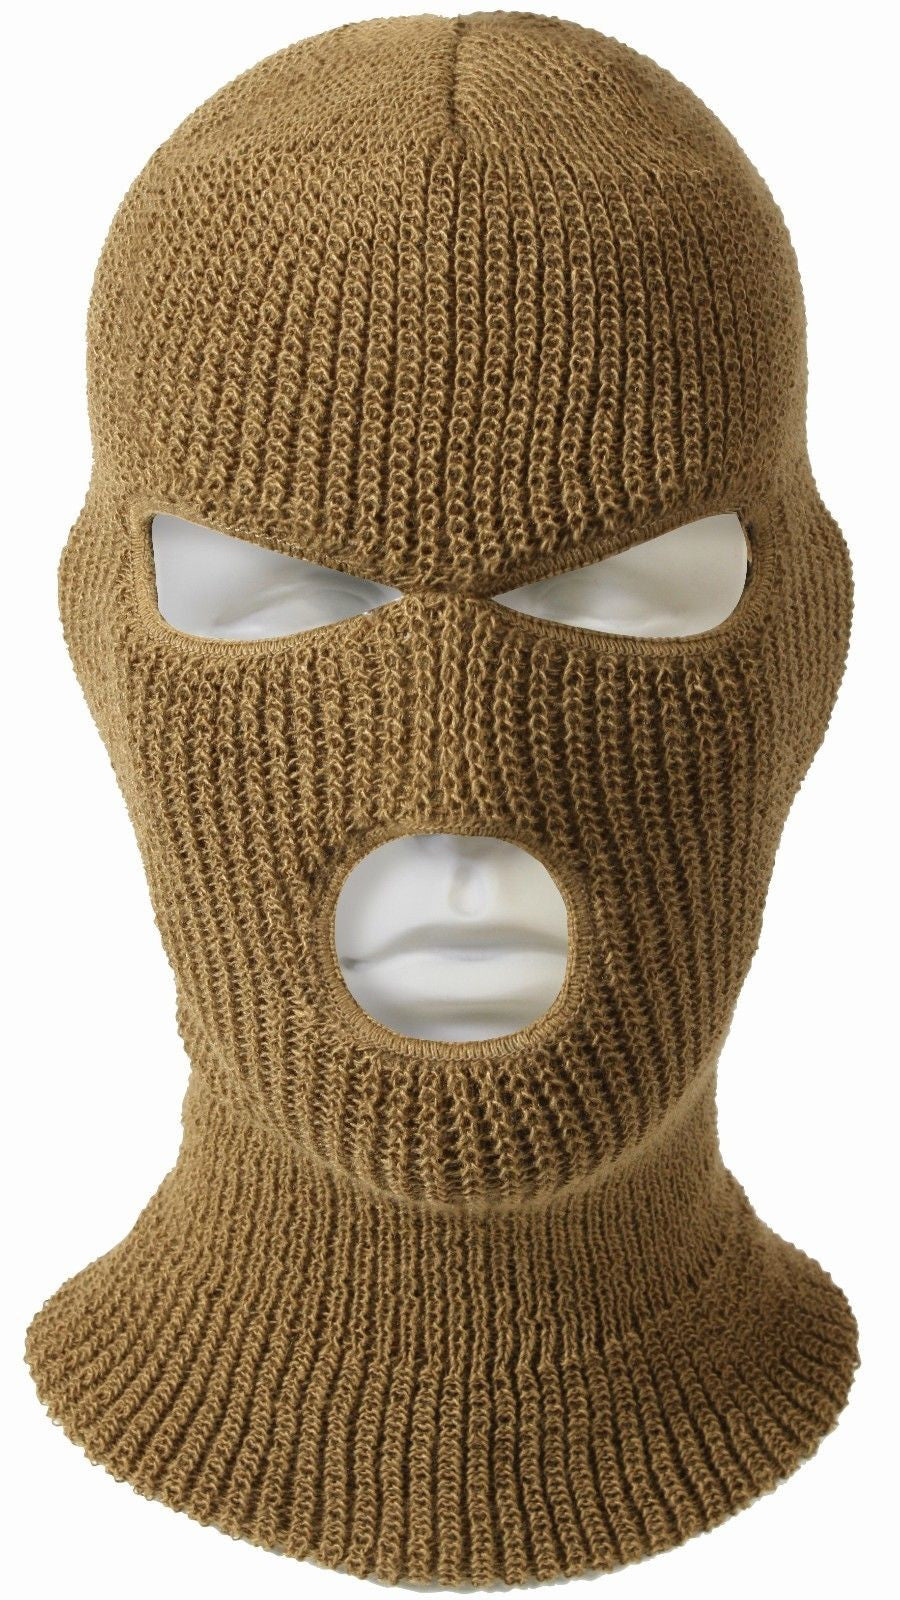 3 Hole Face Mask Ski Mask Winter Cap Balaclava Hood Army Tactical